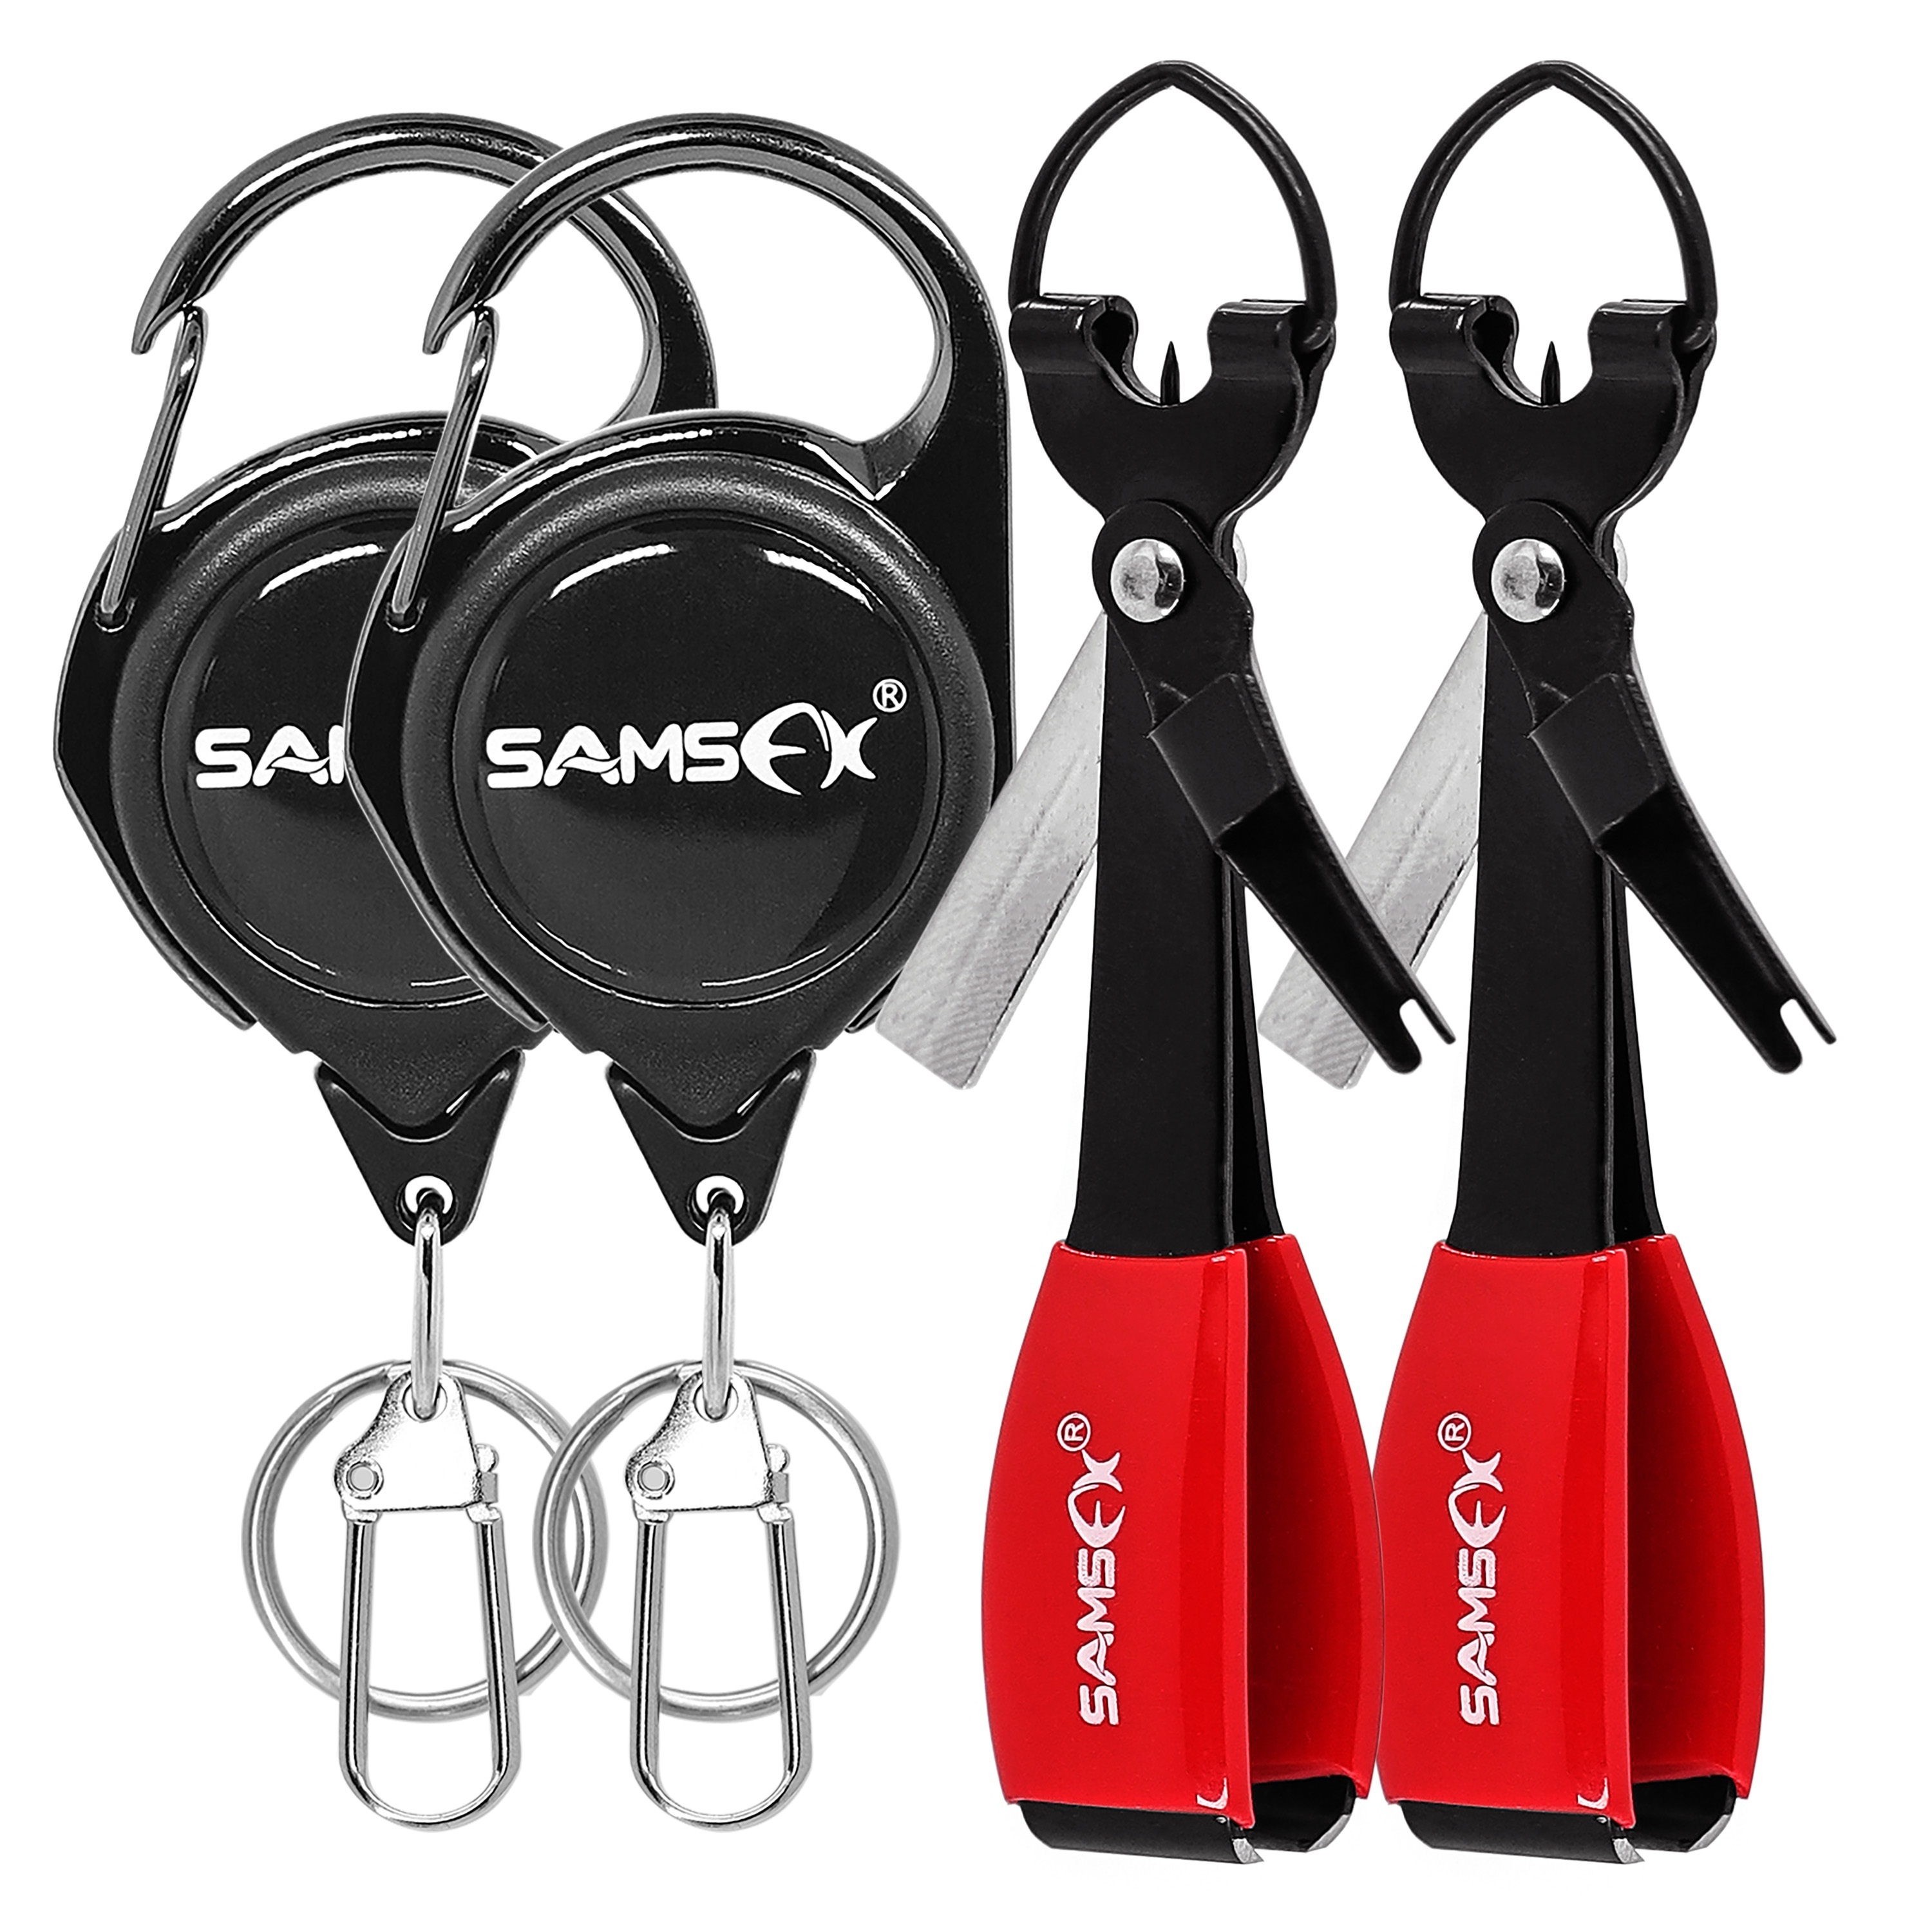 SAMSFX Knot Picker & Disgorger Loop Tyer Hook Tier Fly Tying Tool